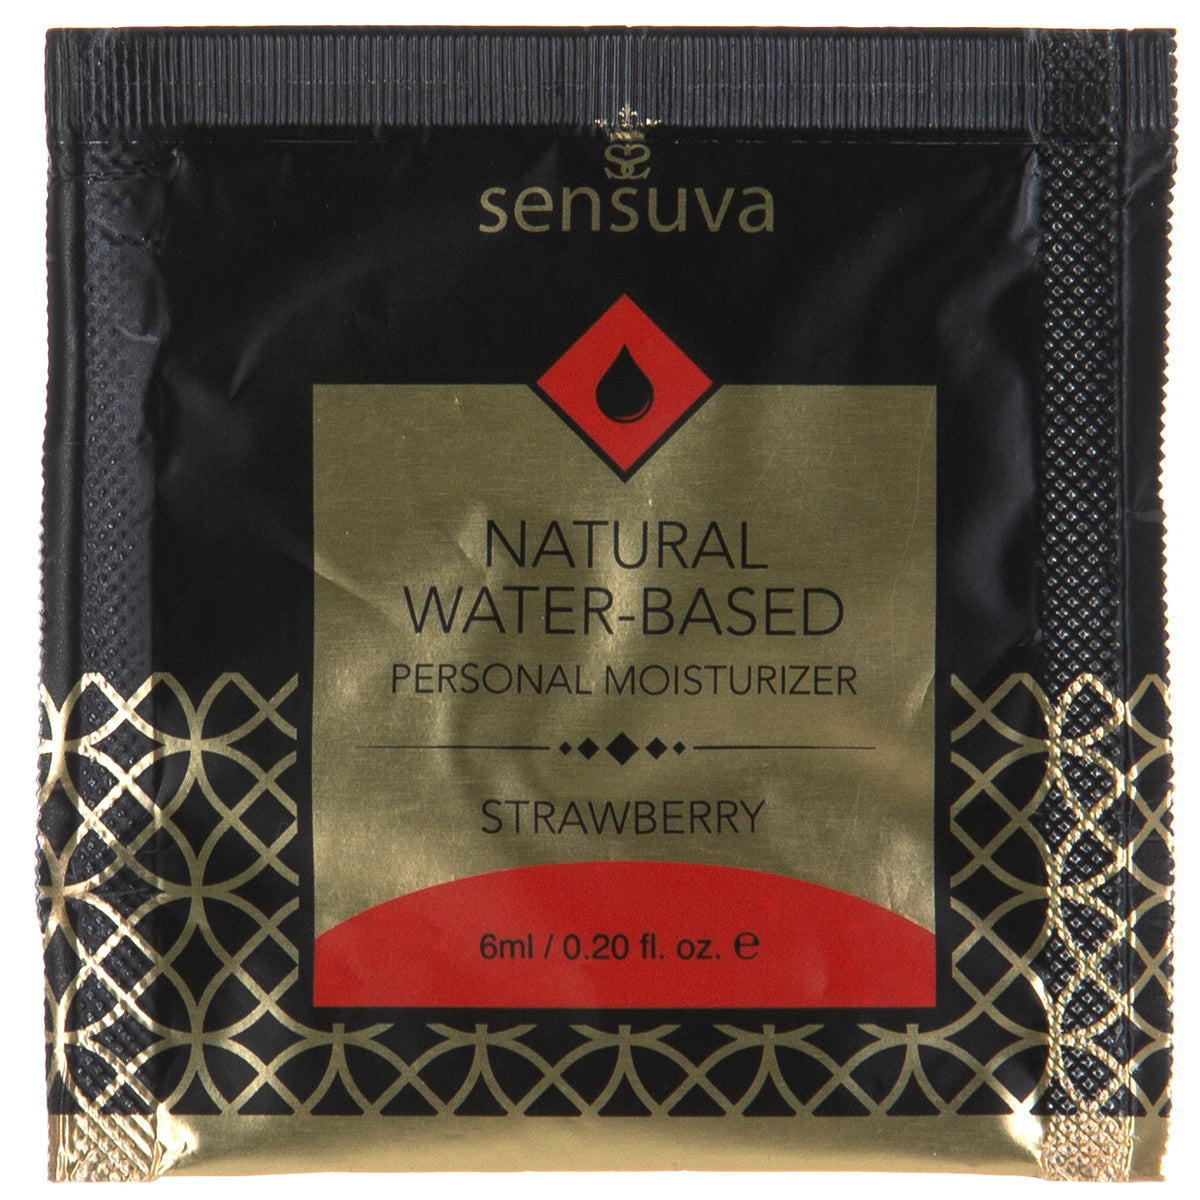 Sensuva Natural Water-Based – Flavoured Personal Moisturizer - 6ml/0.2oz, Strawberry